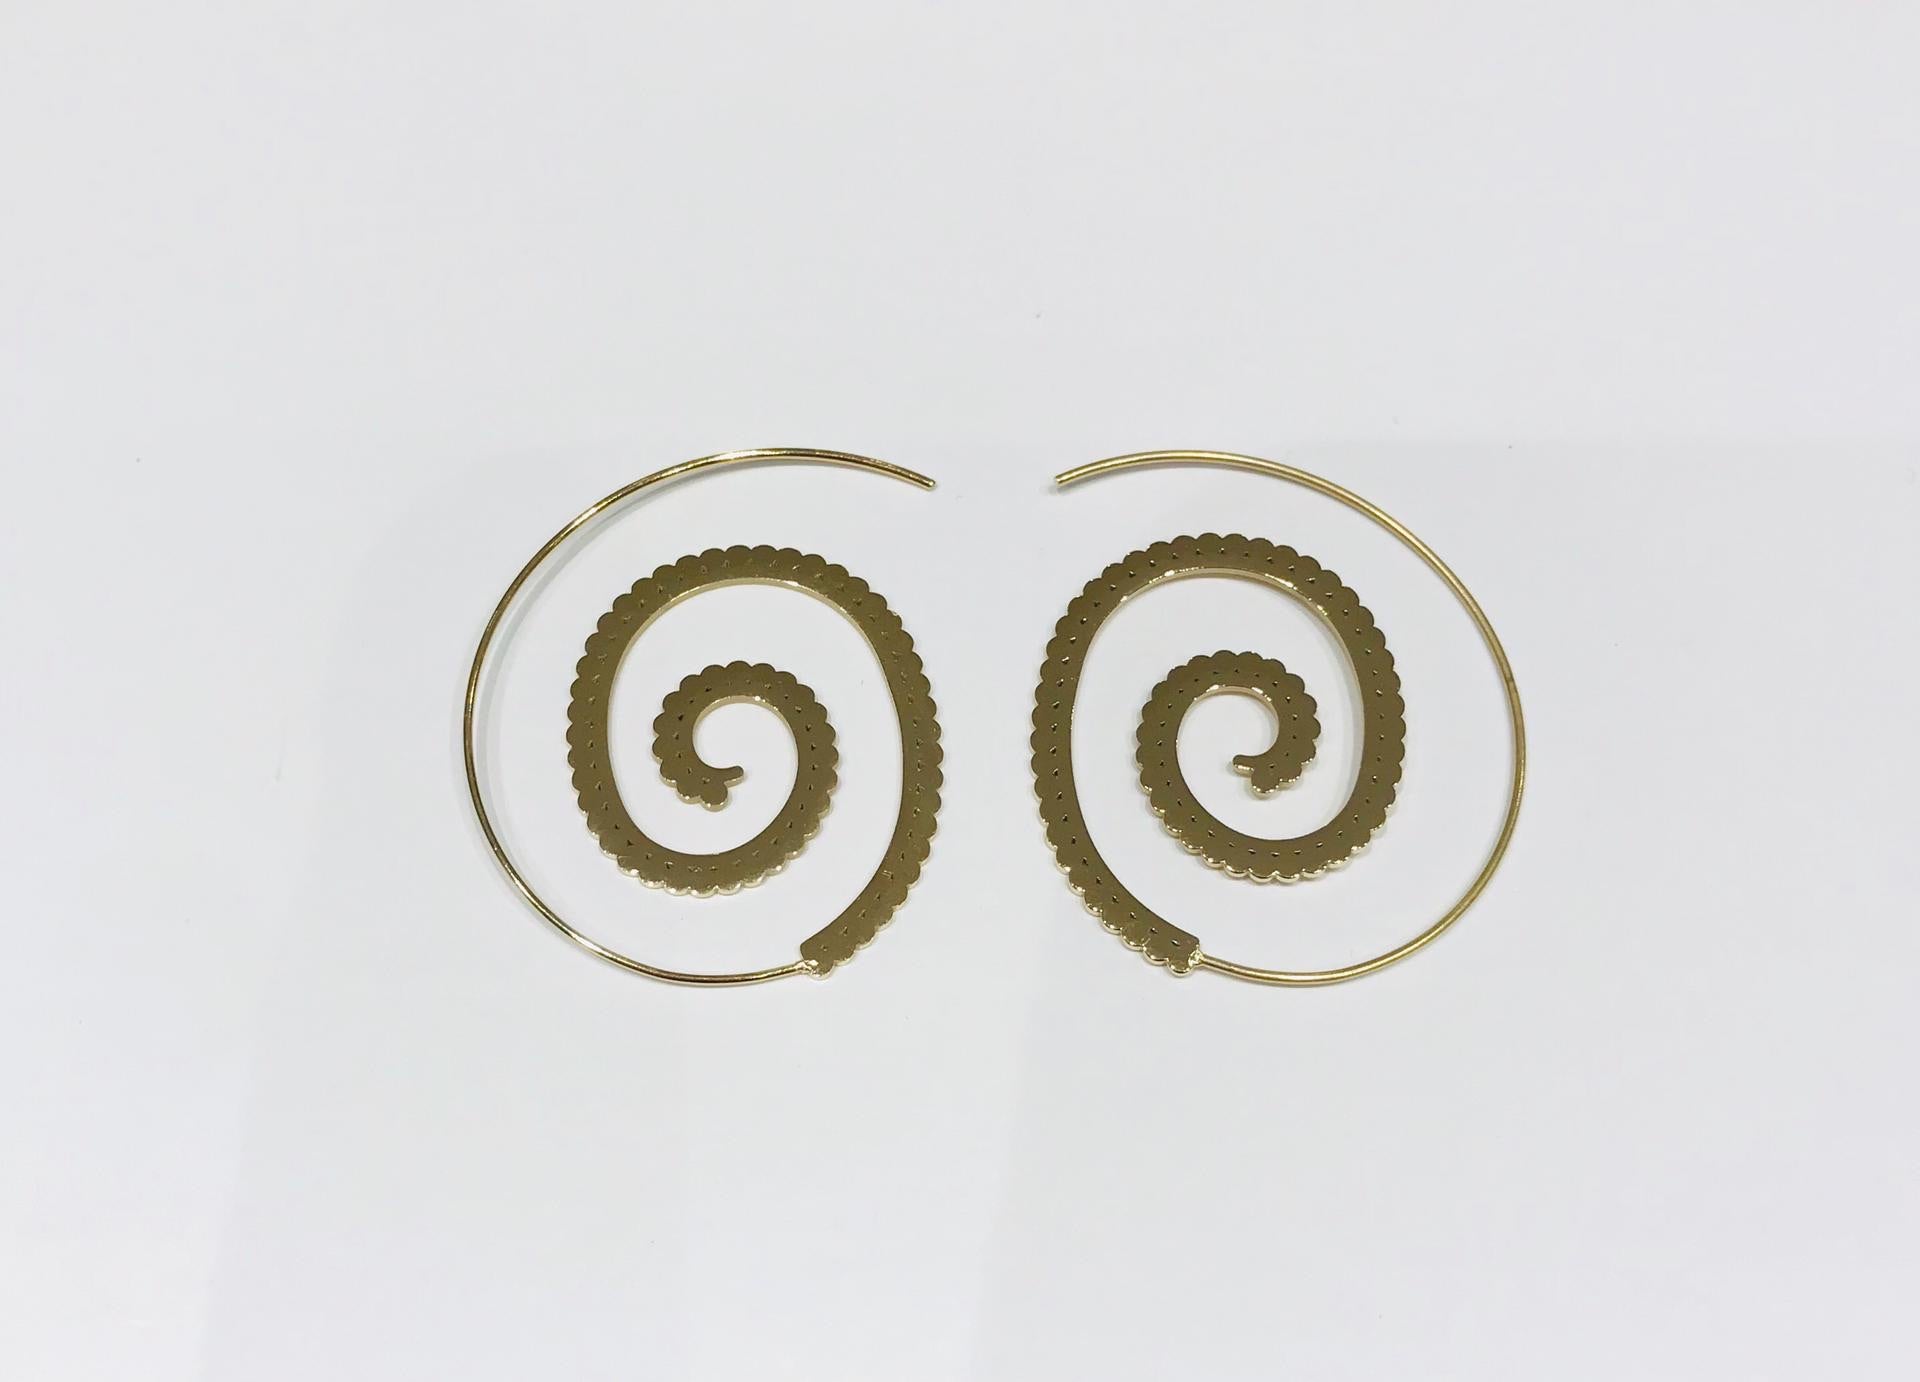 Sam&Cel - steel spiral earrings